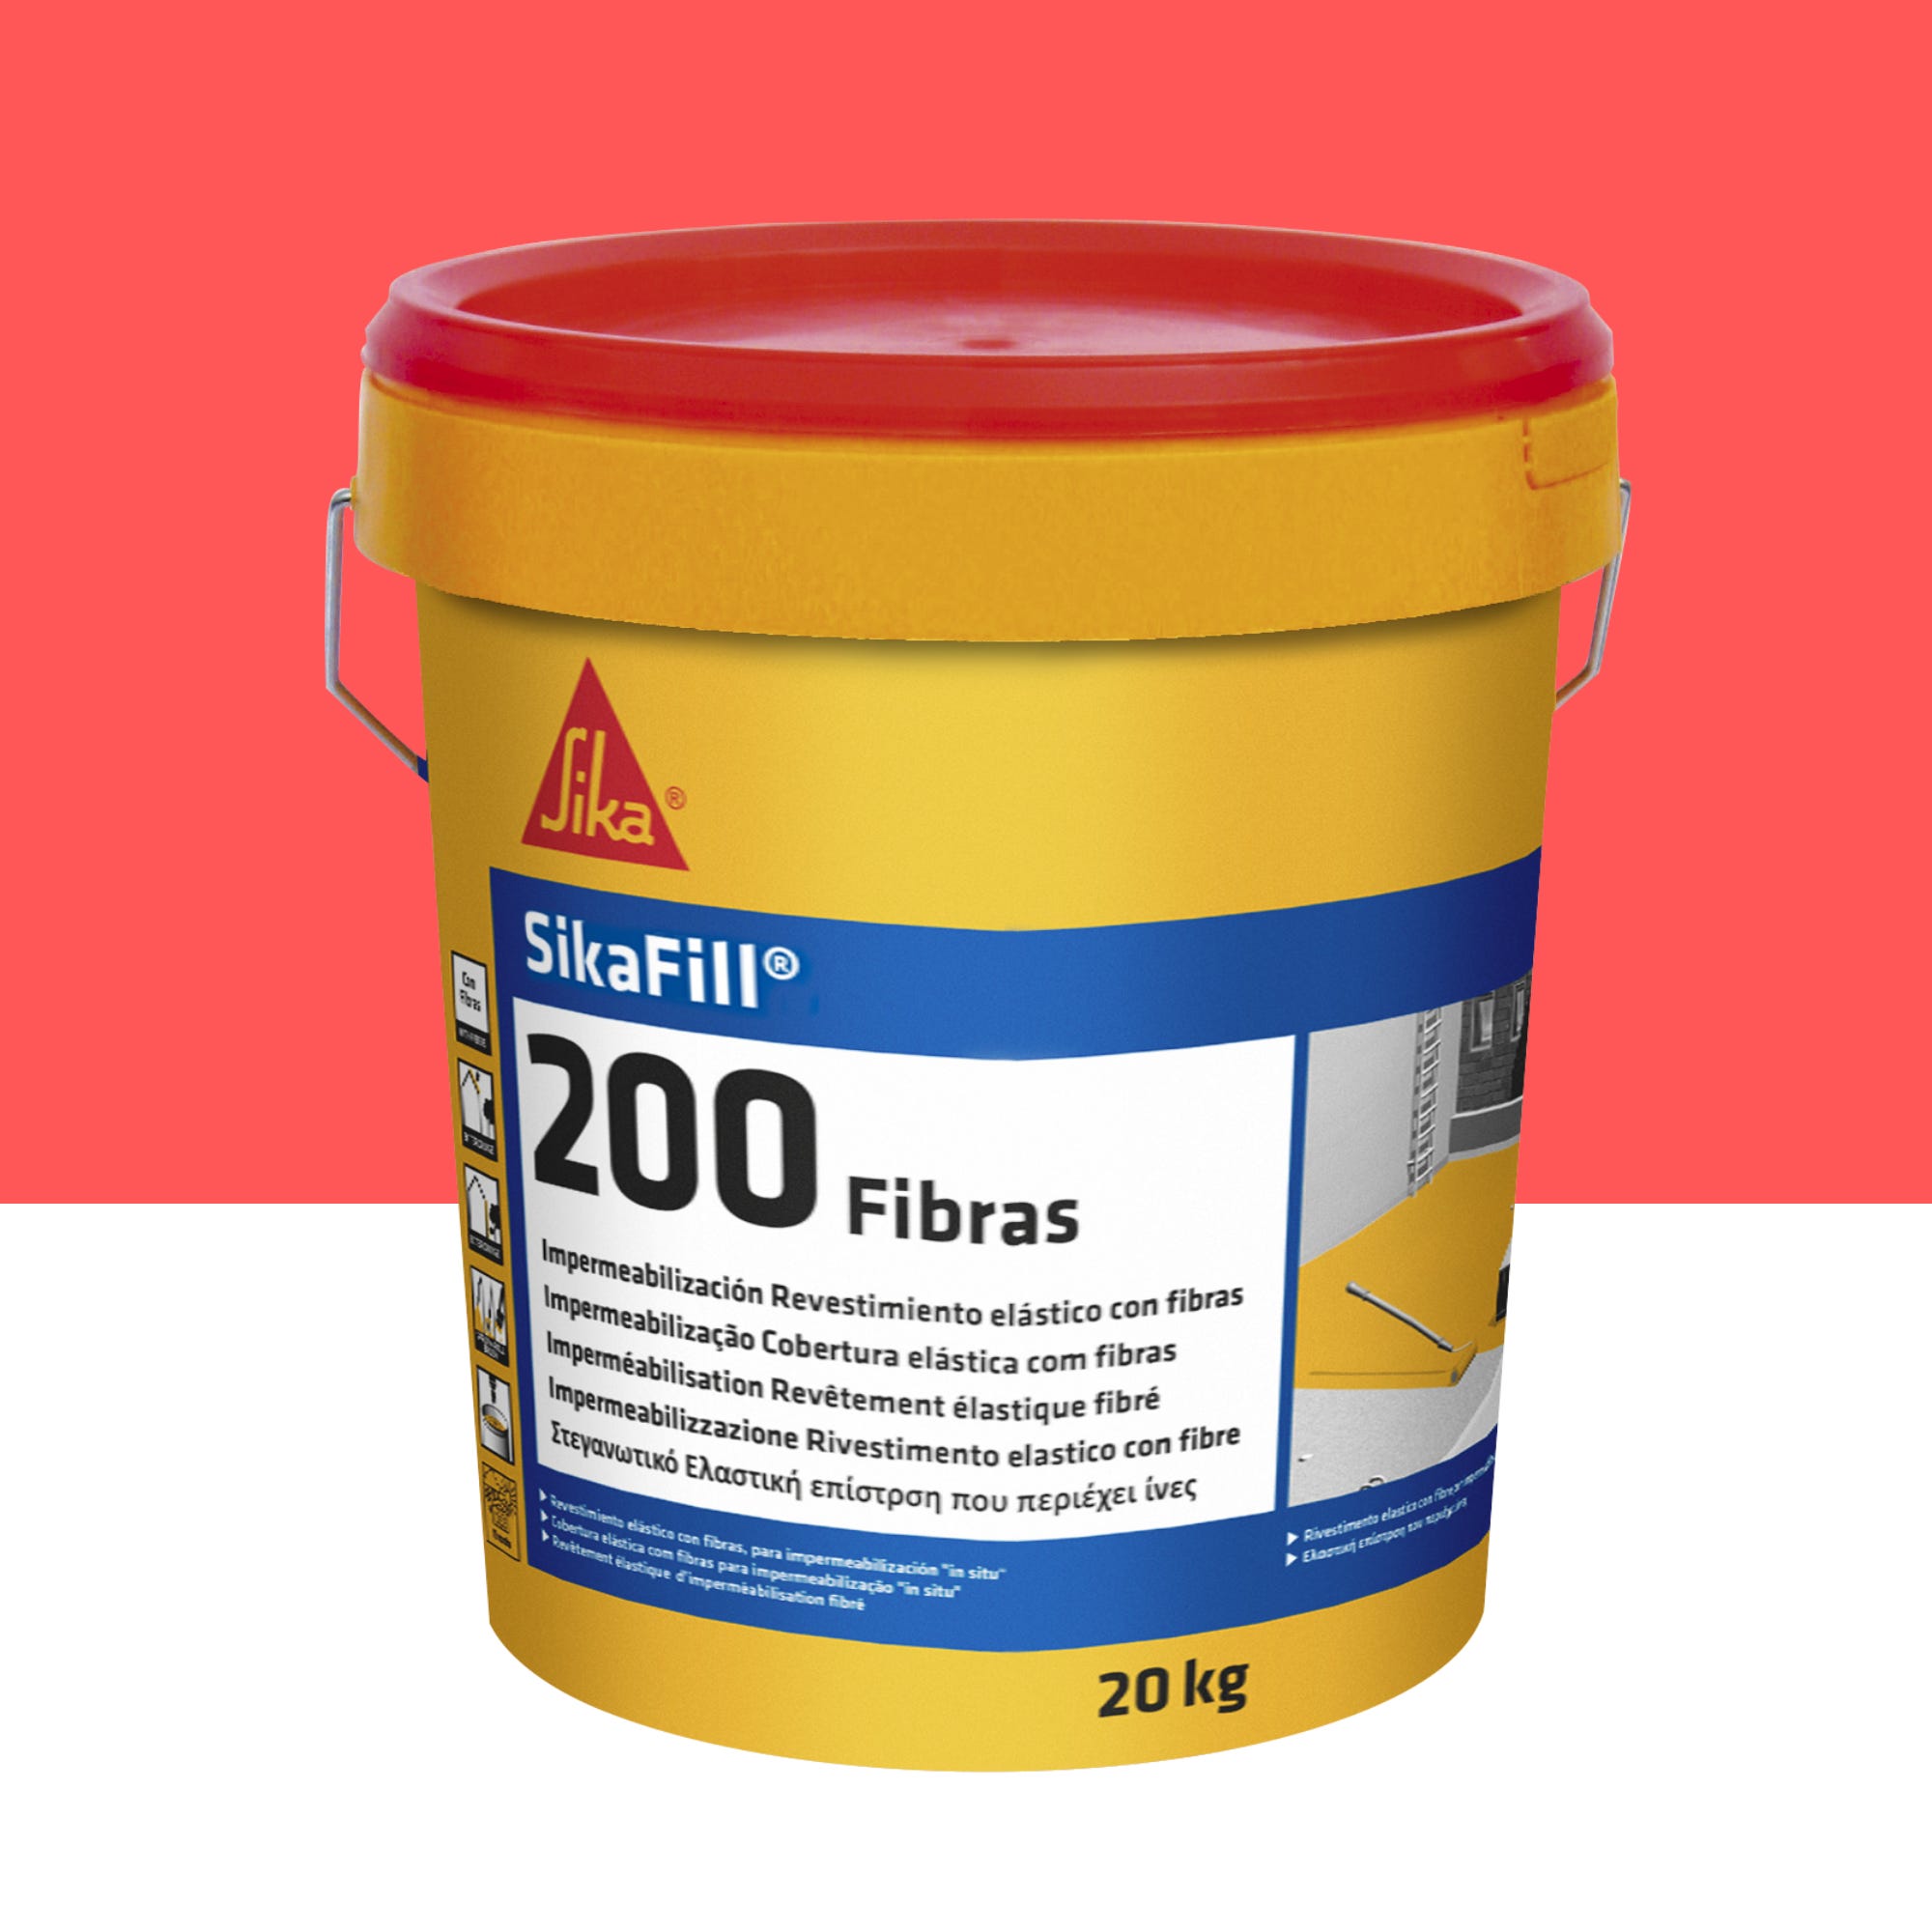 Pintura impermeabilizante SIKAFILL 200 fibras 20KG rojo